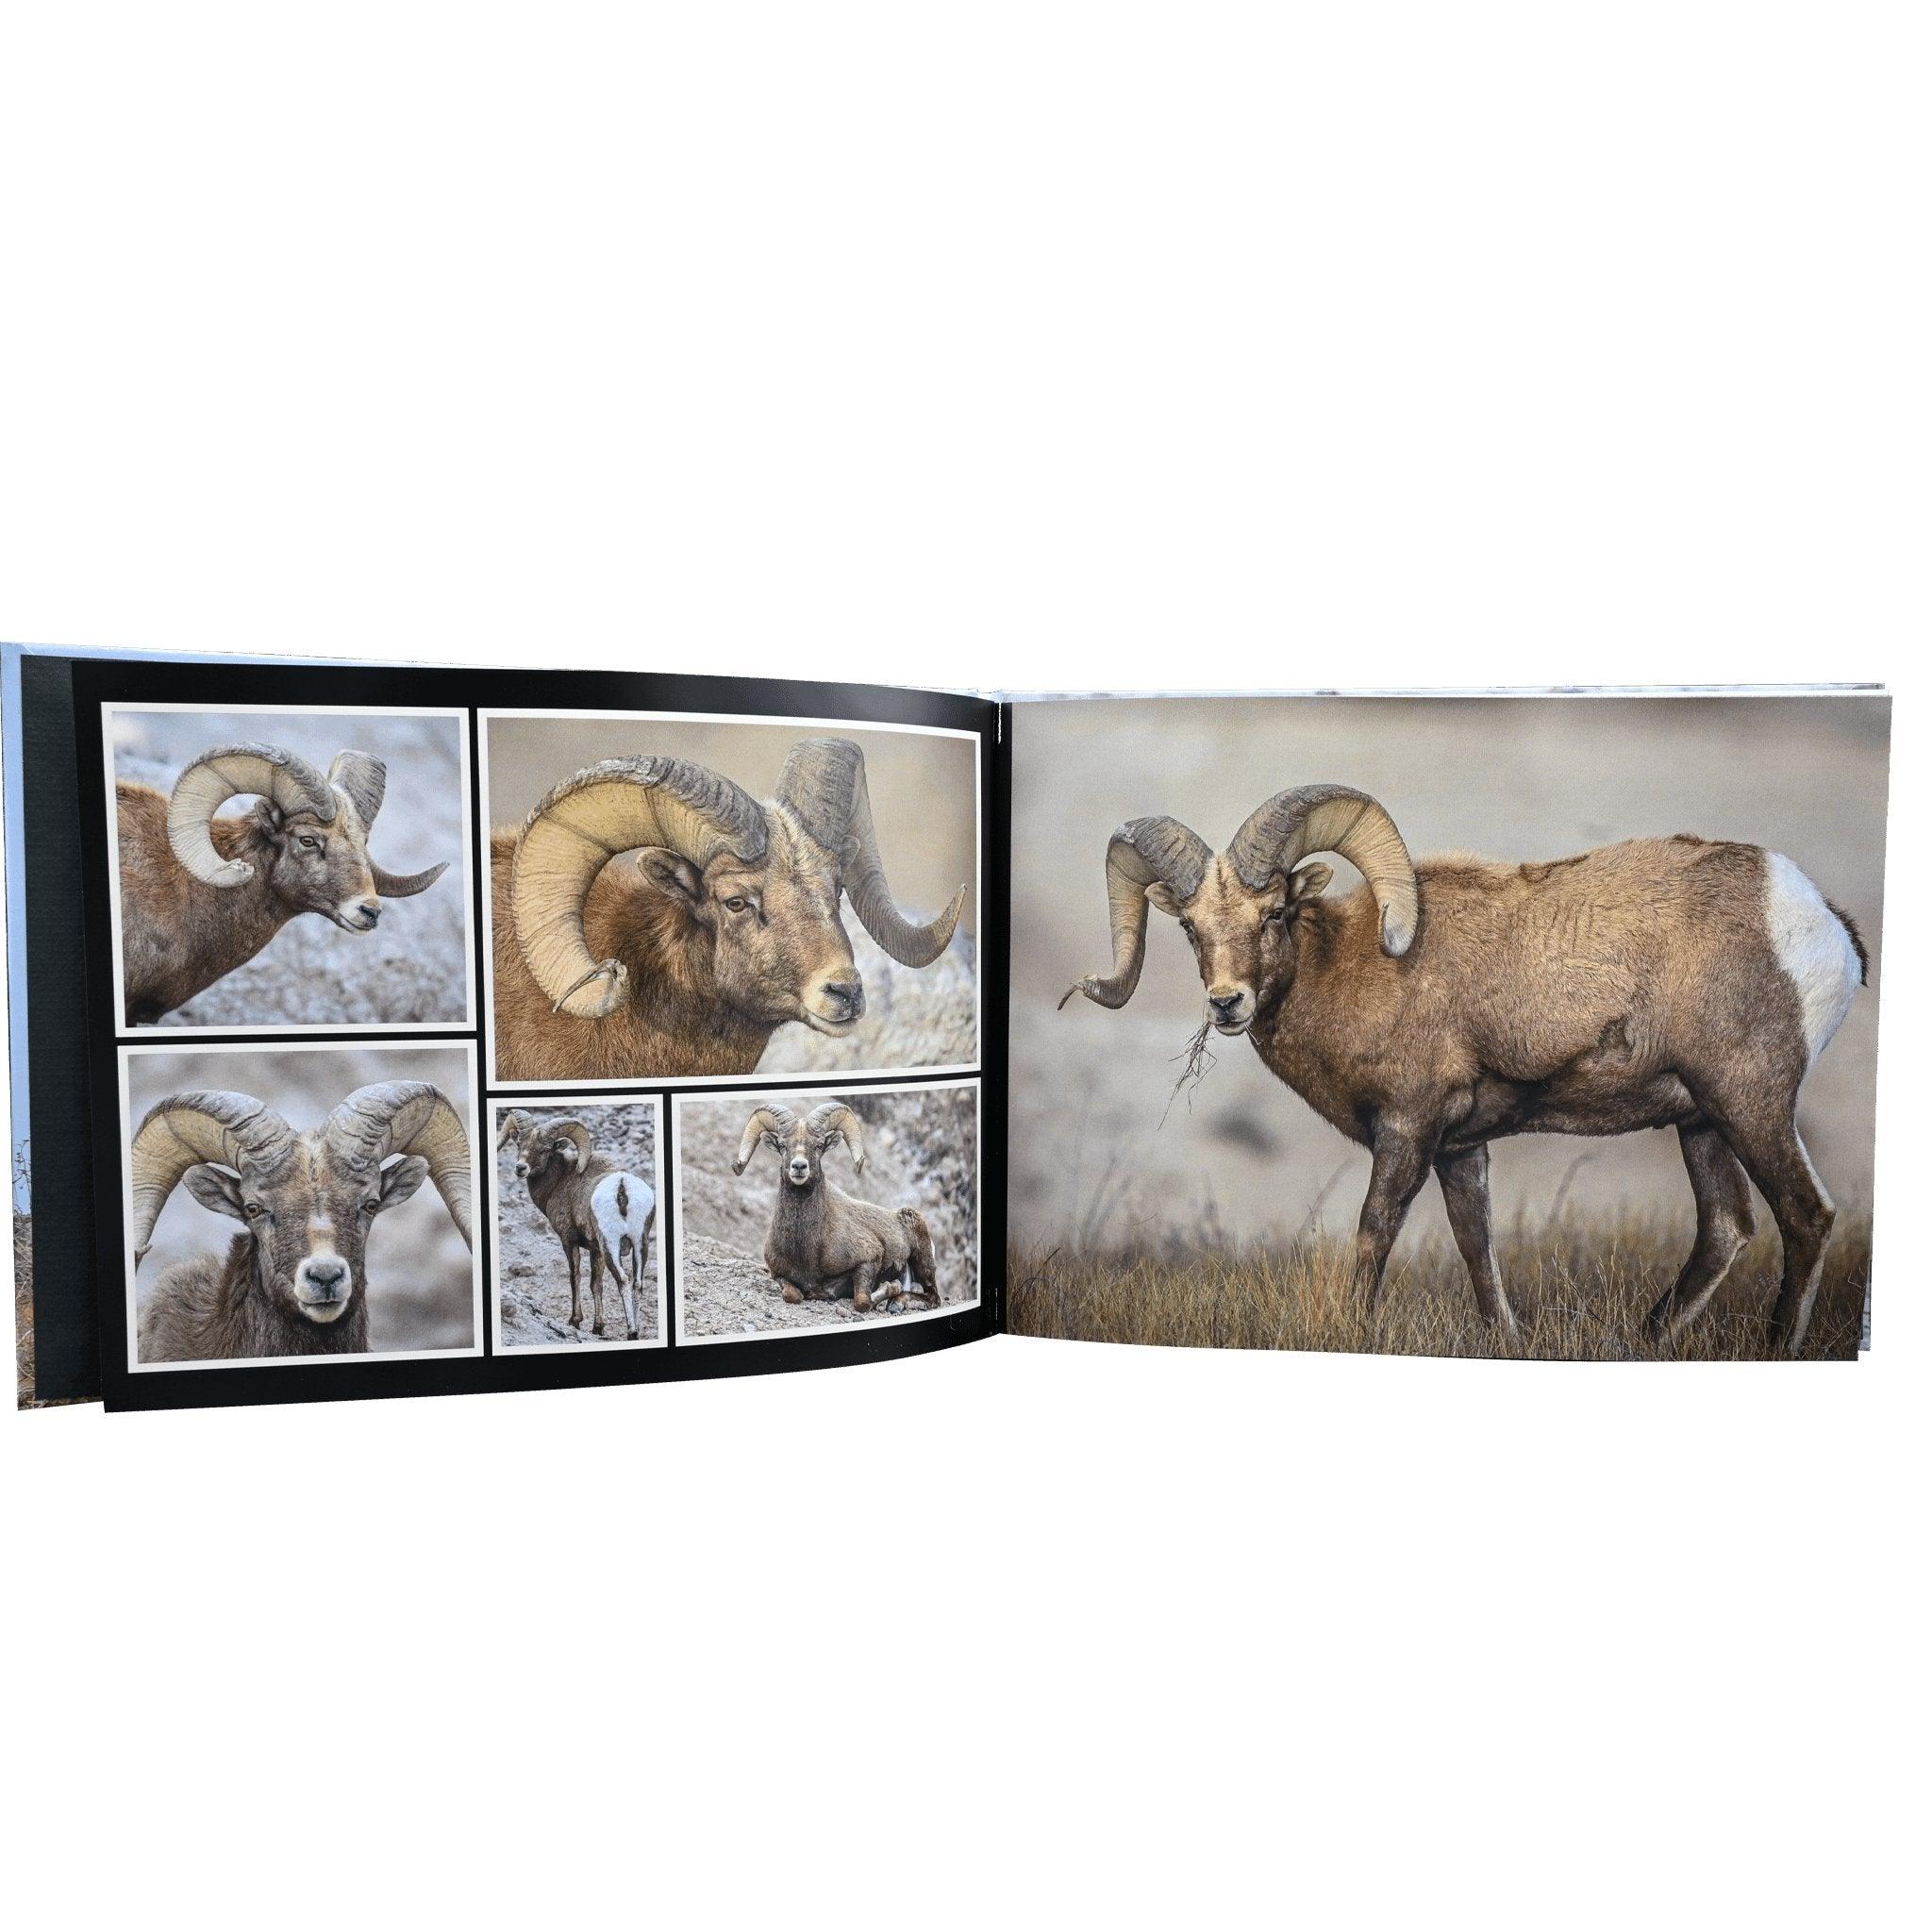 Bighorn Sheep Large Reference Book - Images by Dan Verrips - Matuska Taxidermy Supply Company